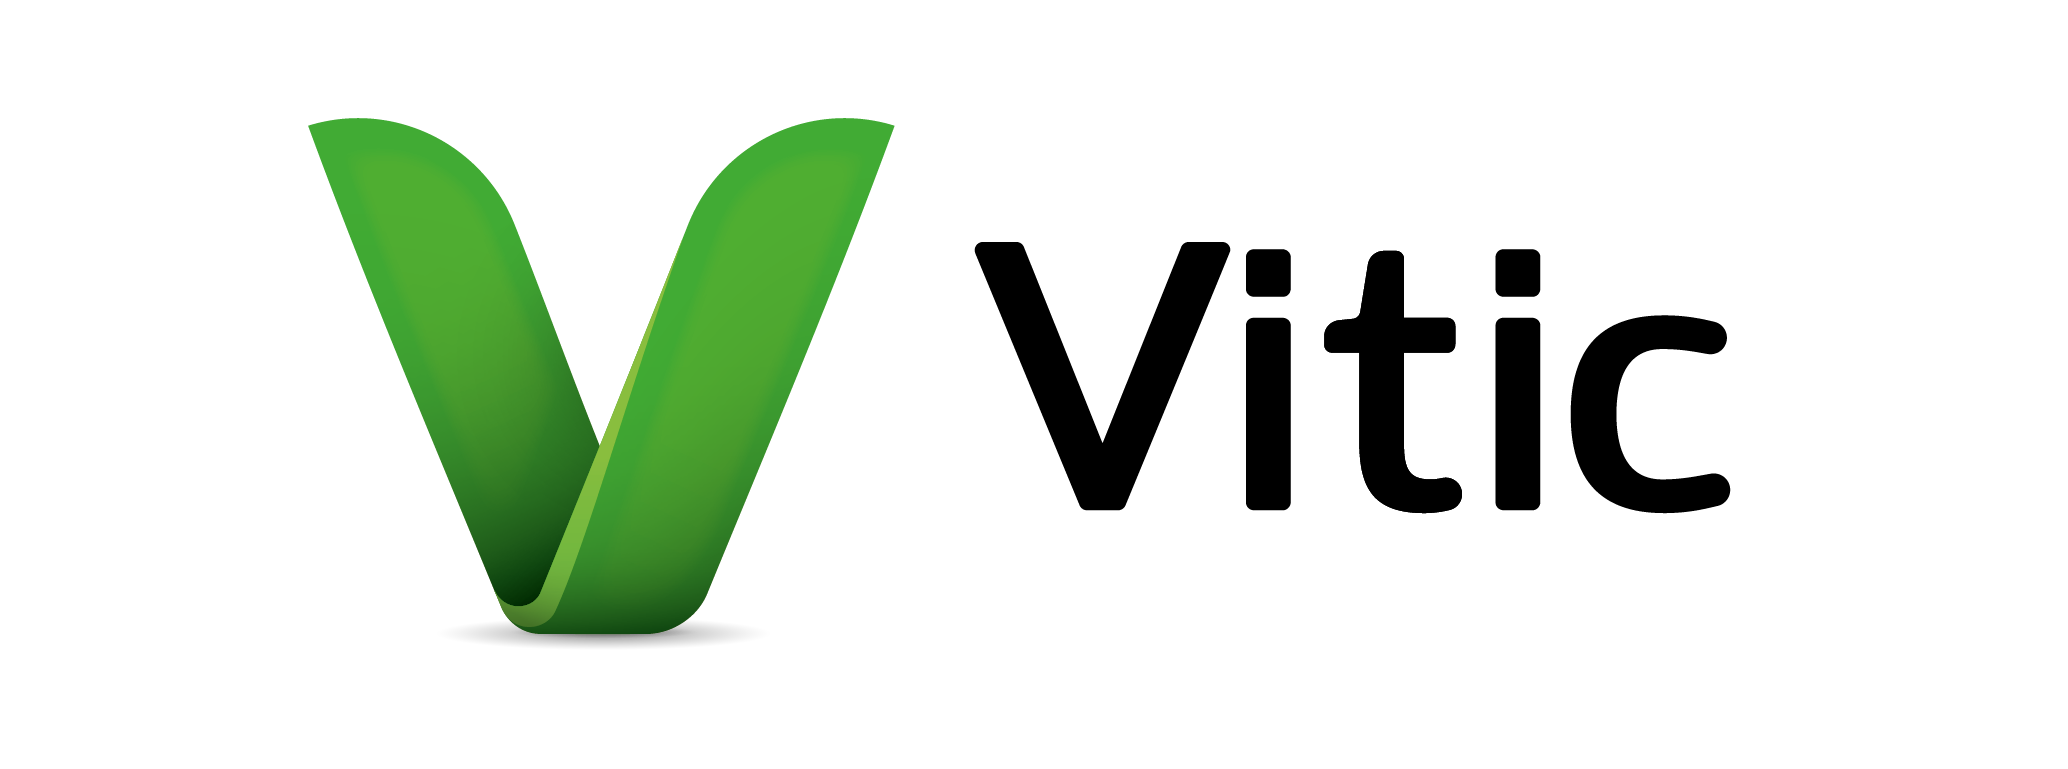 vitic logo 1